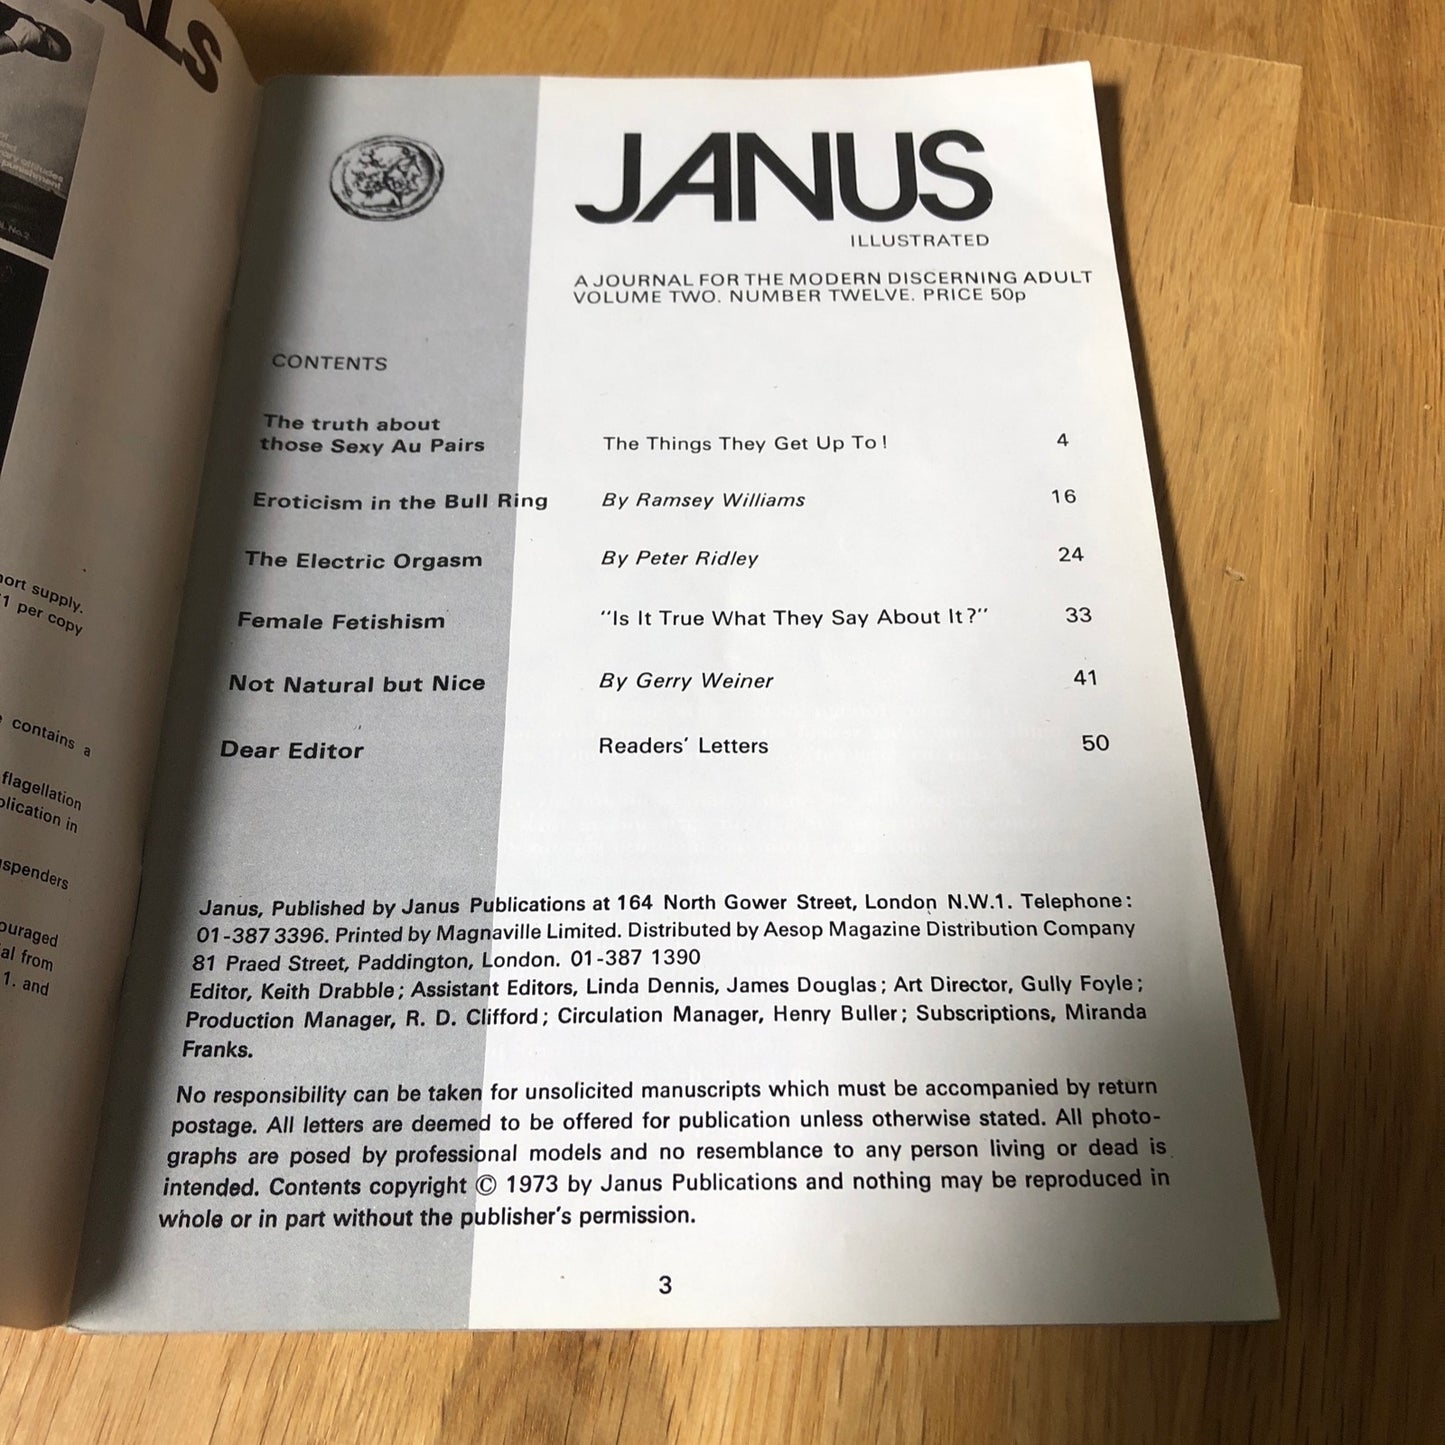 Janus Magazine Vol 2 No 12